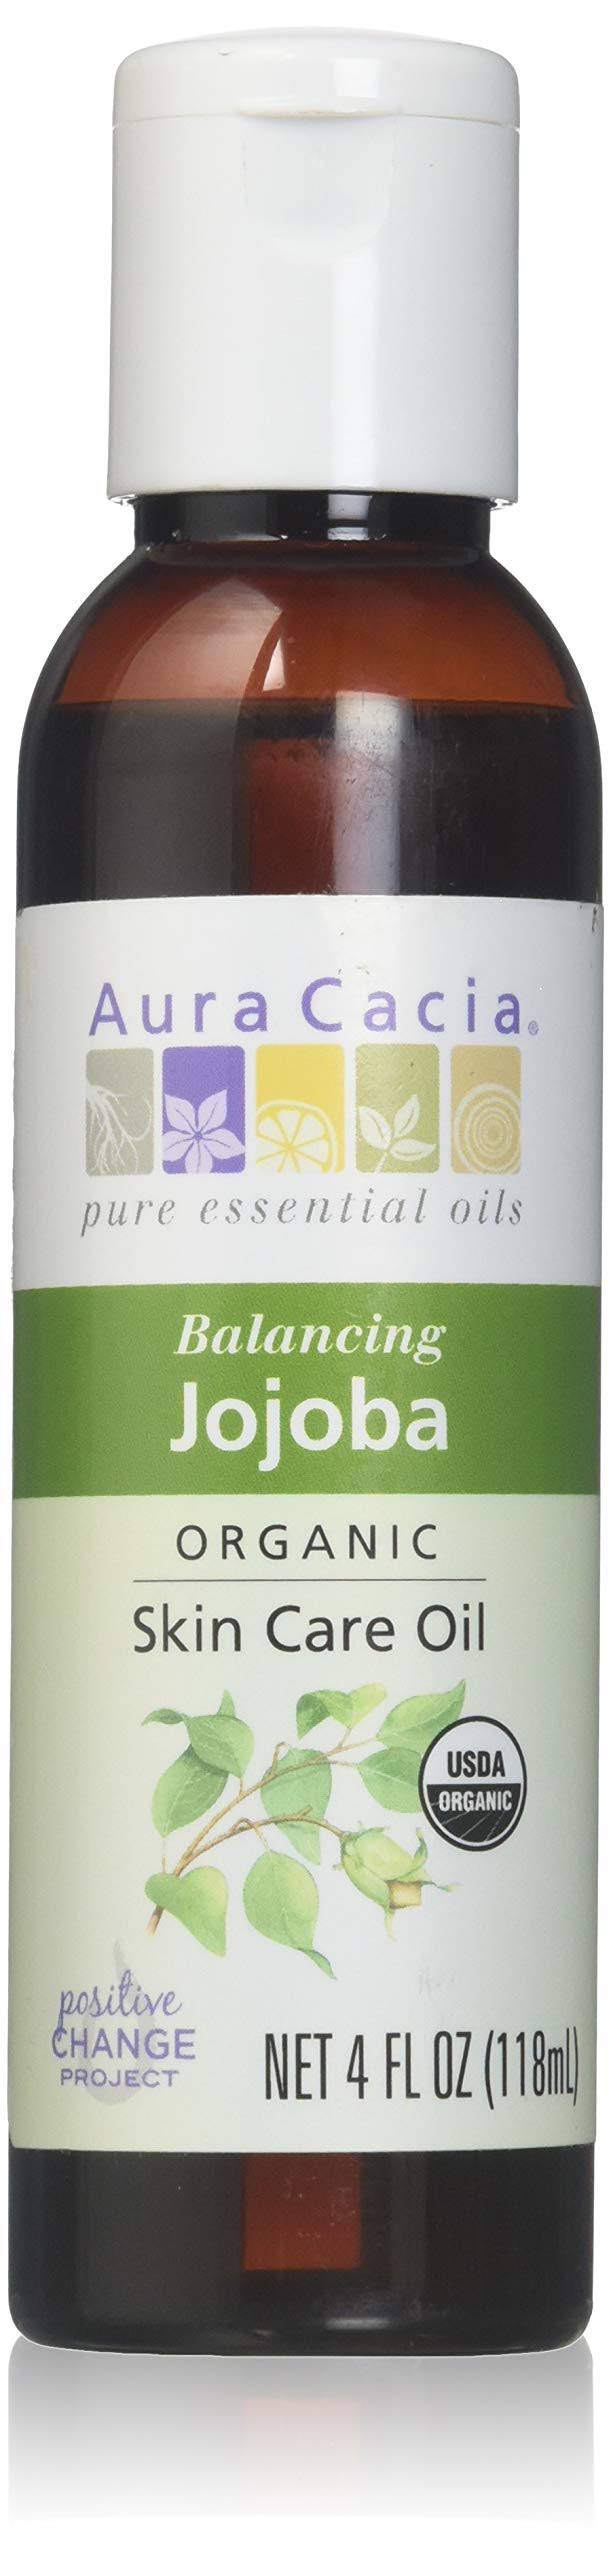 Aura Cacia Certified Organic Jojoba Skin Care Oil - 4oz